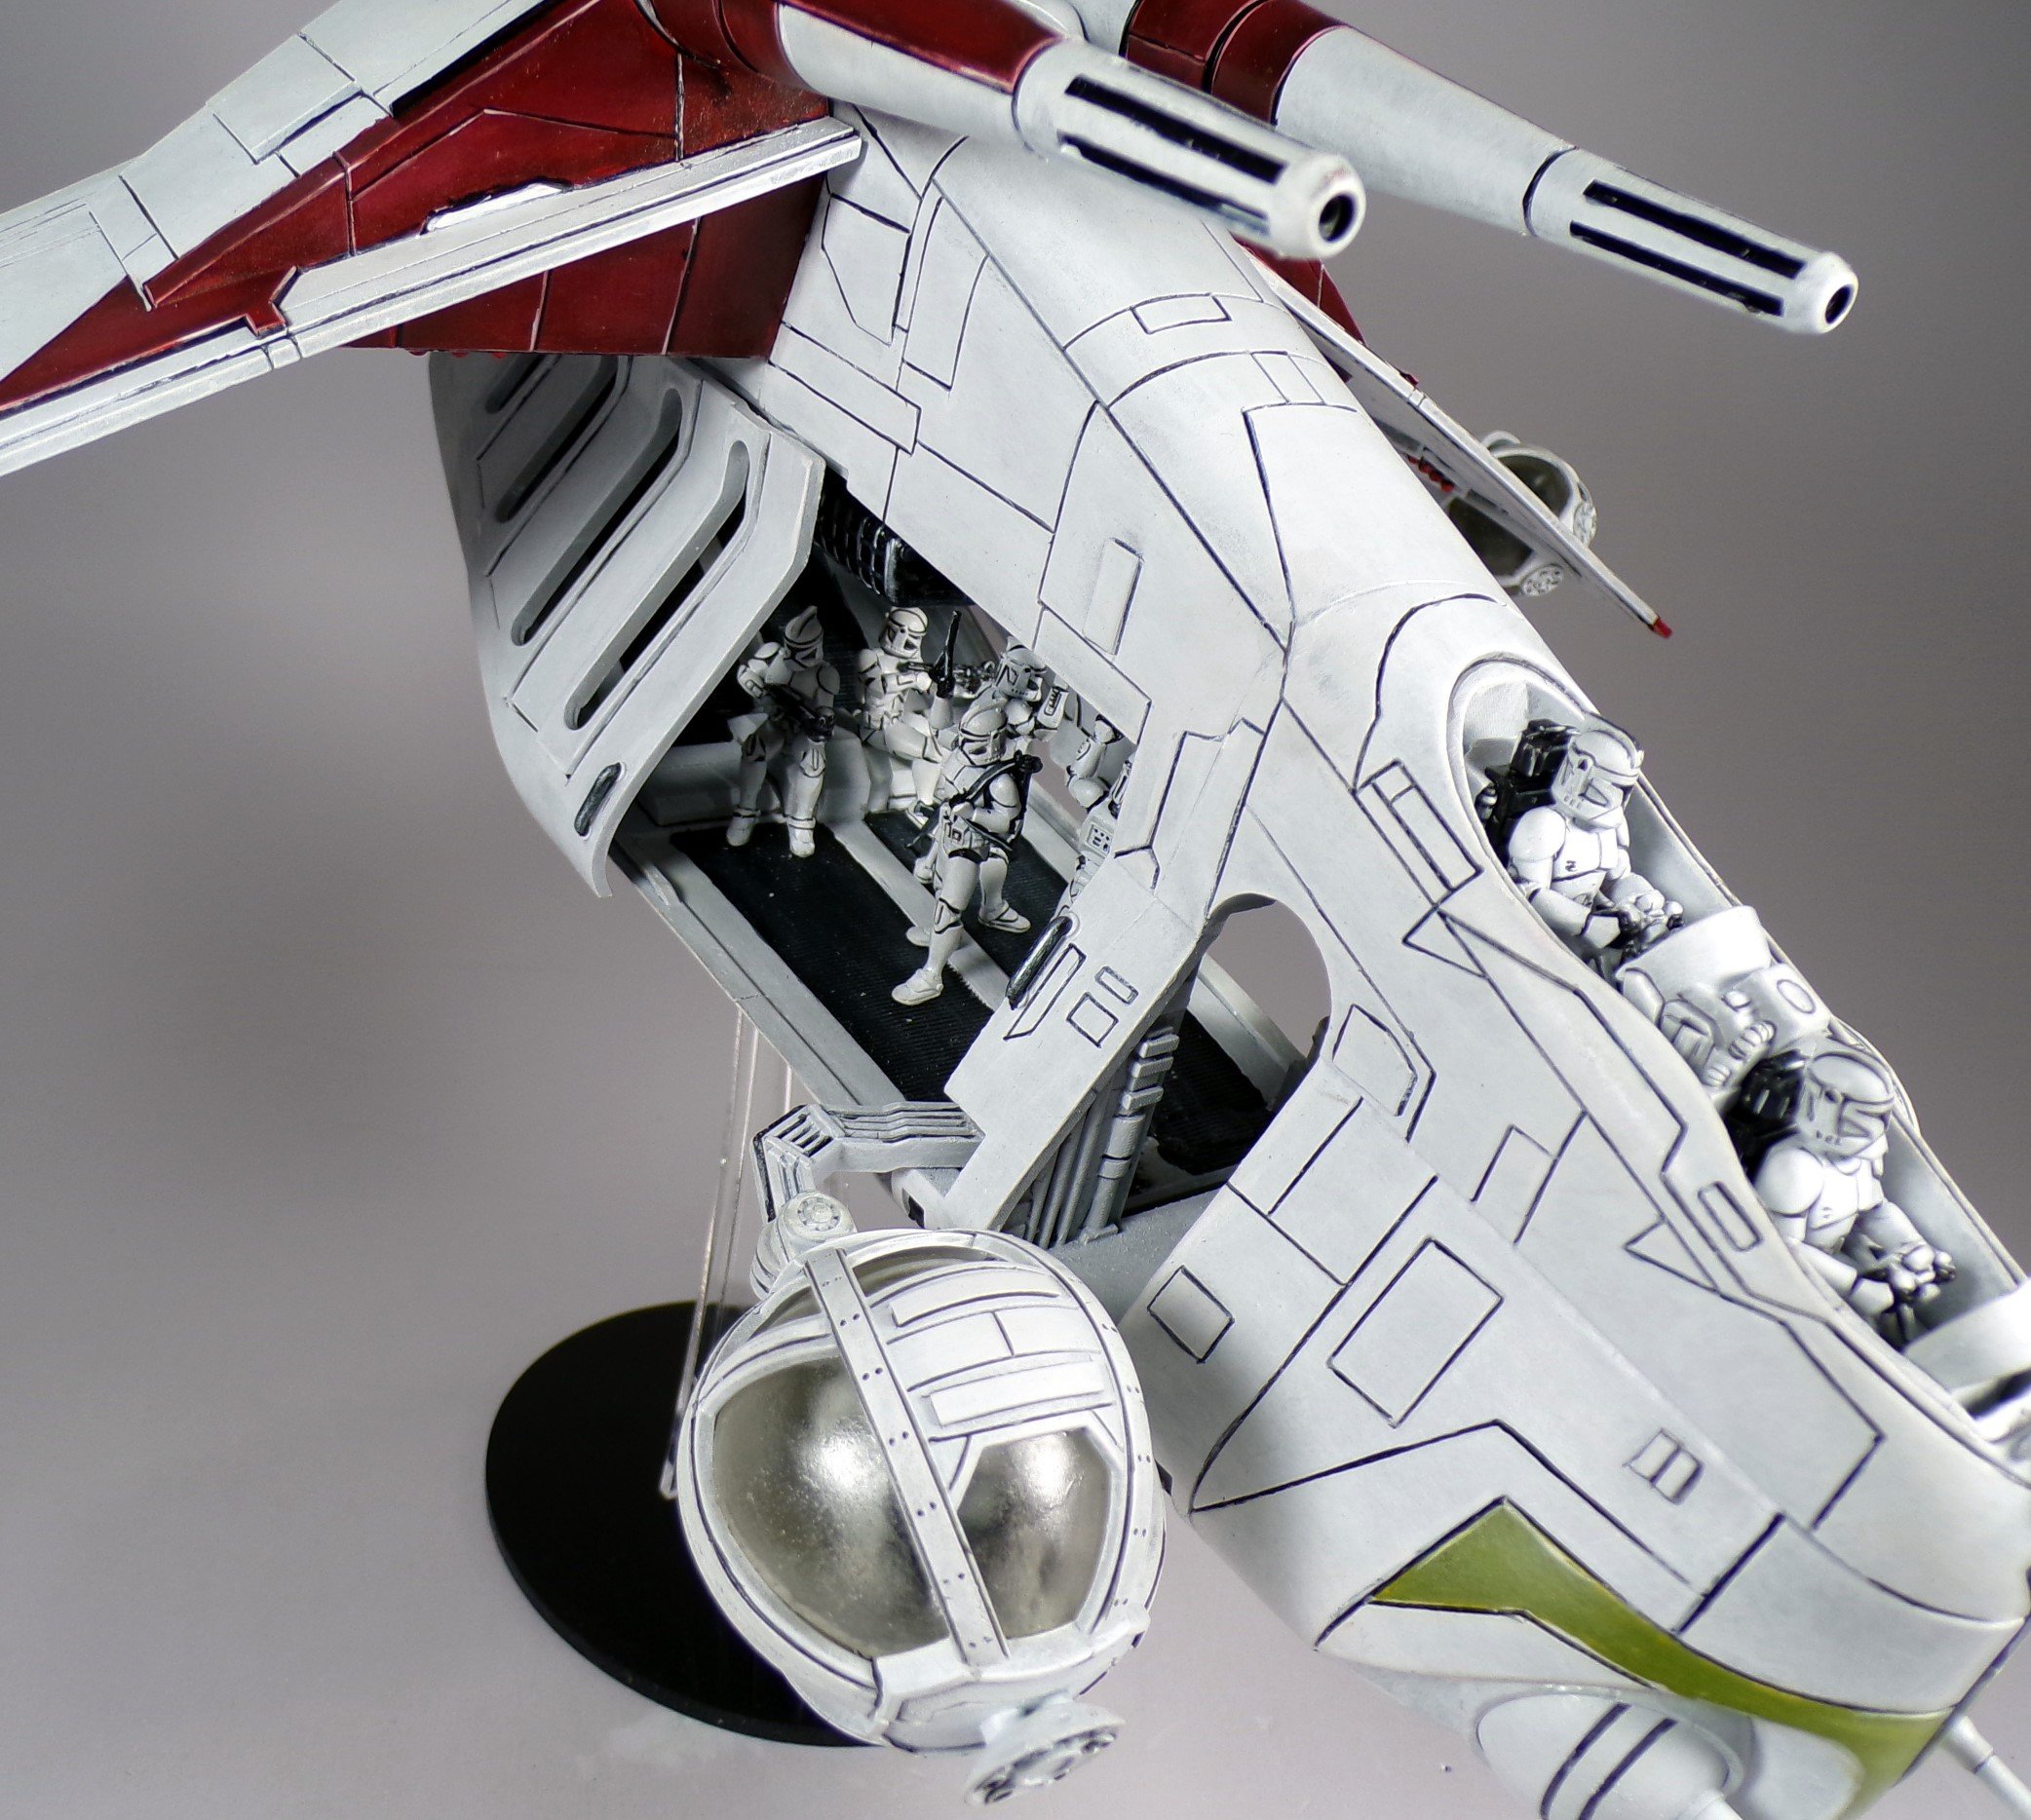 Paintedfigs Star Wars Legion Miniature Painting Service LAAT Republic Gunship (5).jpg